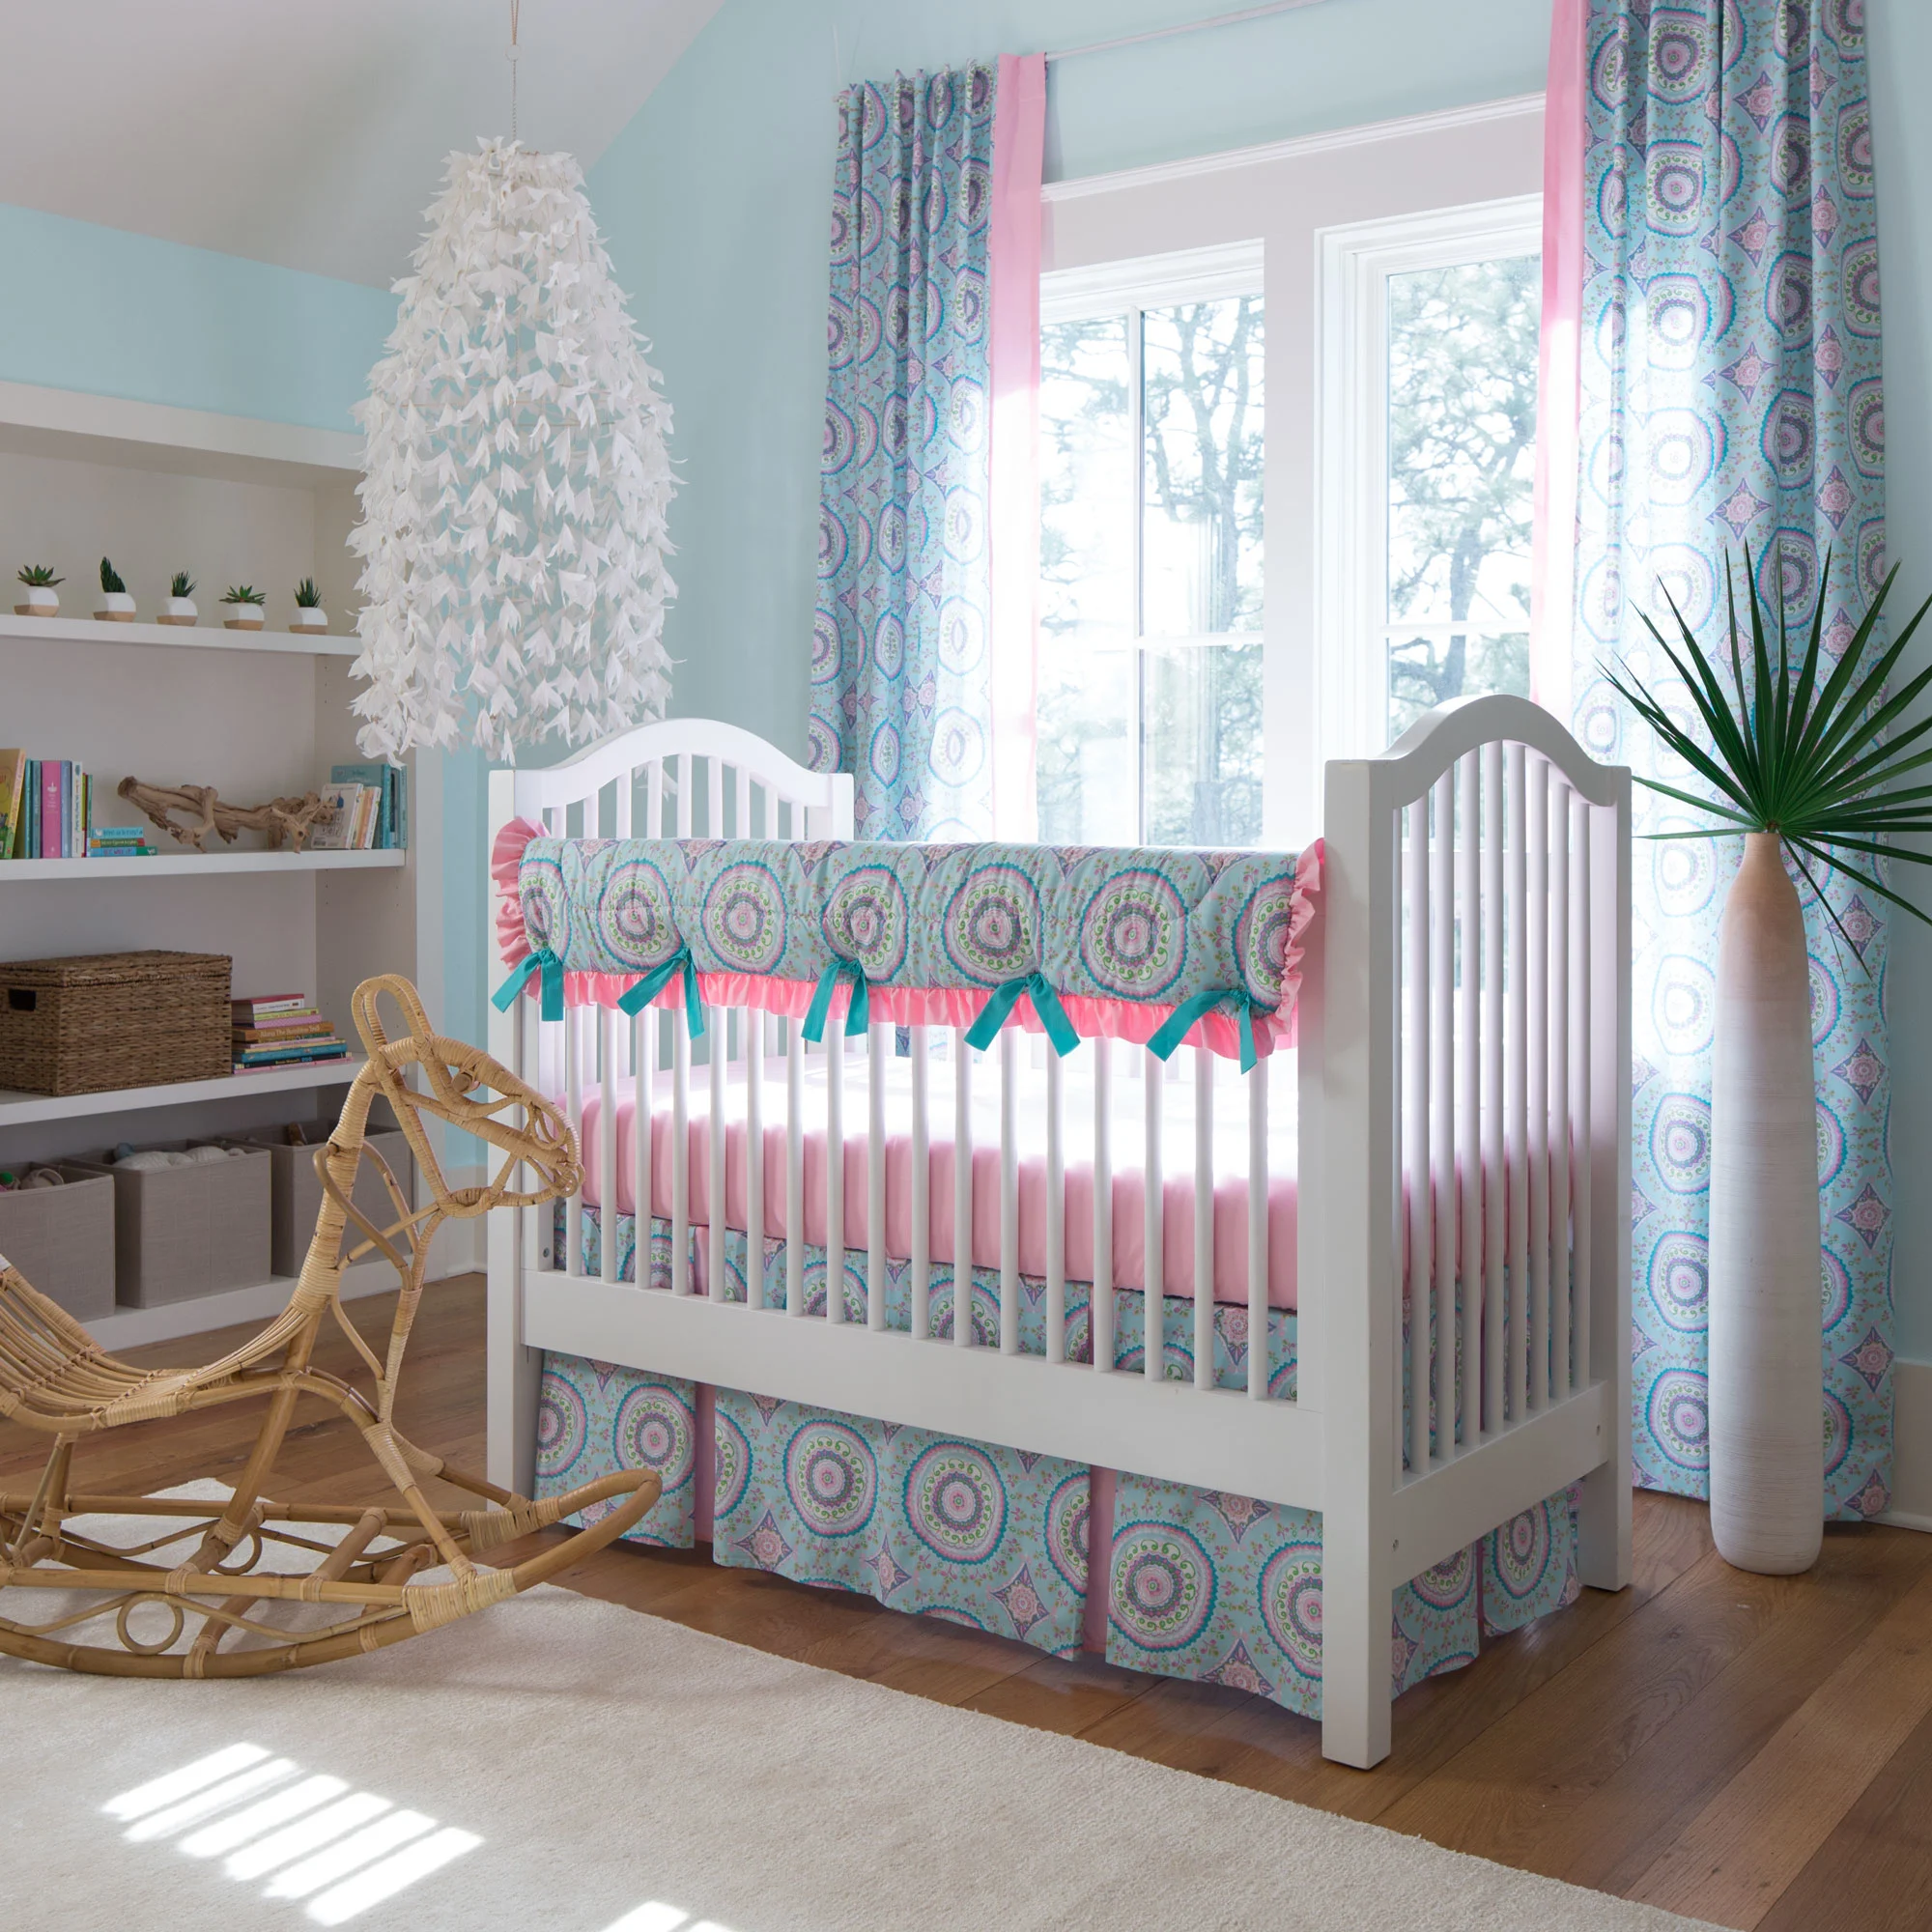 Aqua Haute Crib Bedding Collection from Carousel Designs